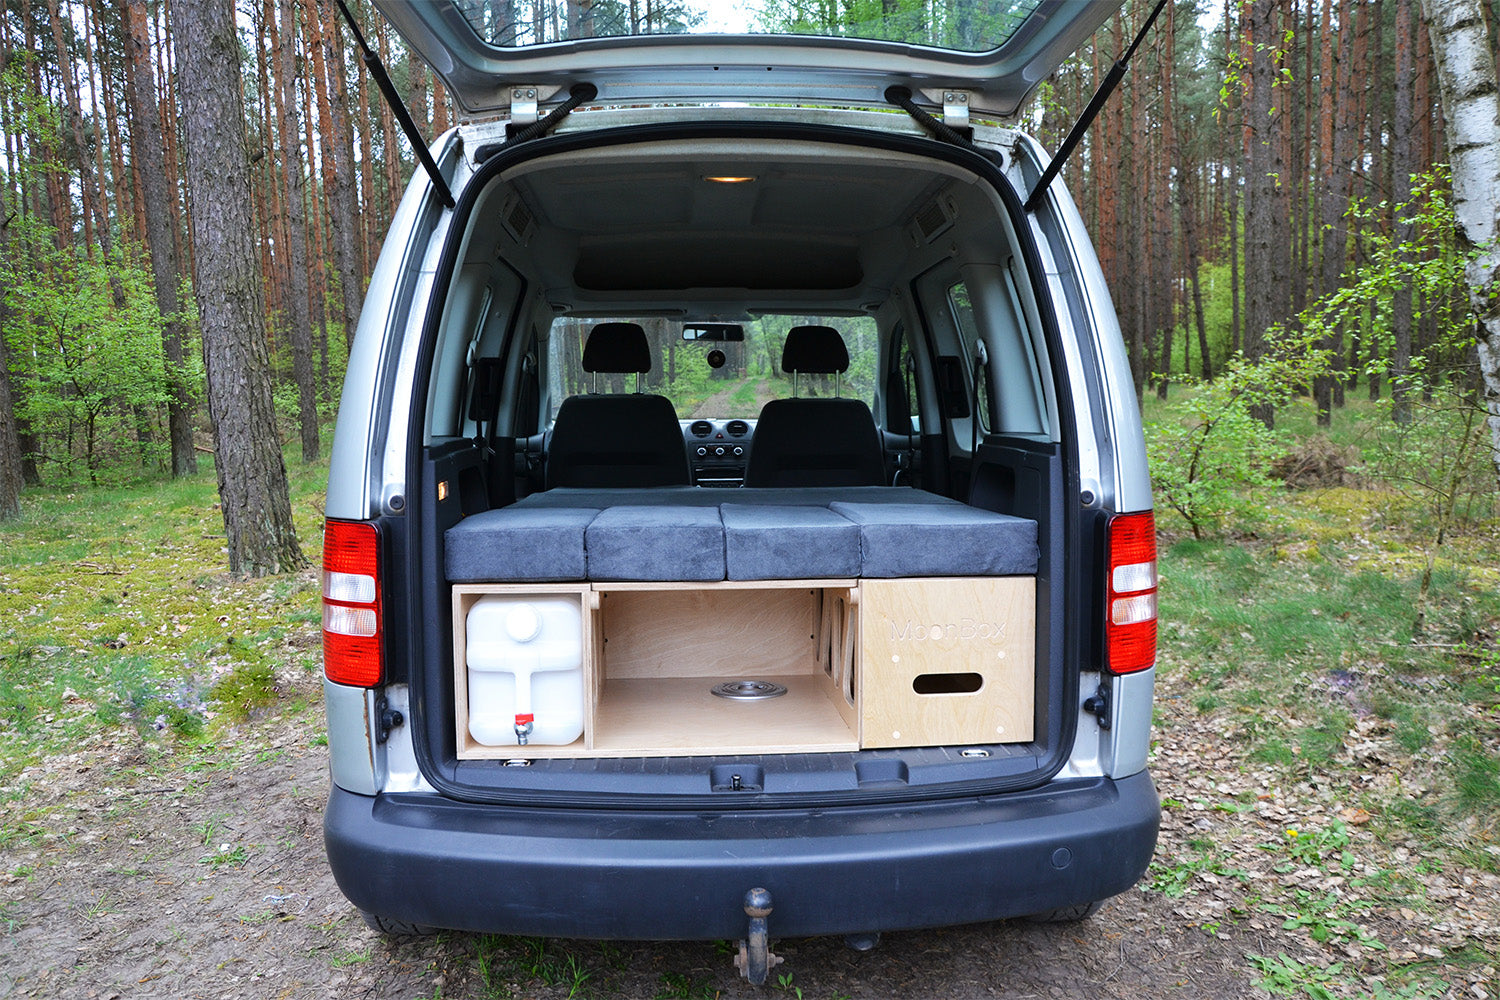 Moonbox Campingbox Minivan 111cm Modify